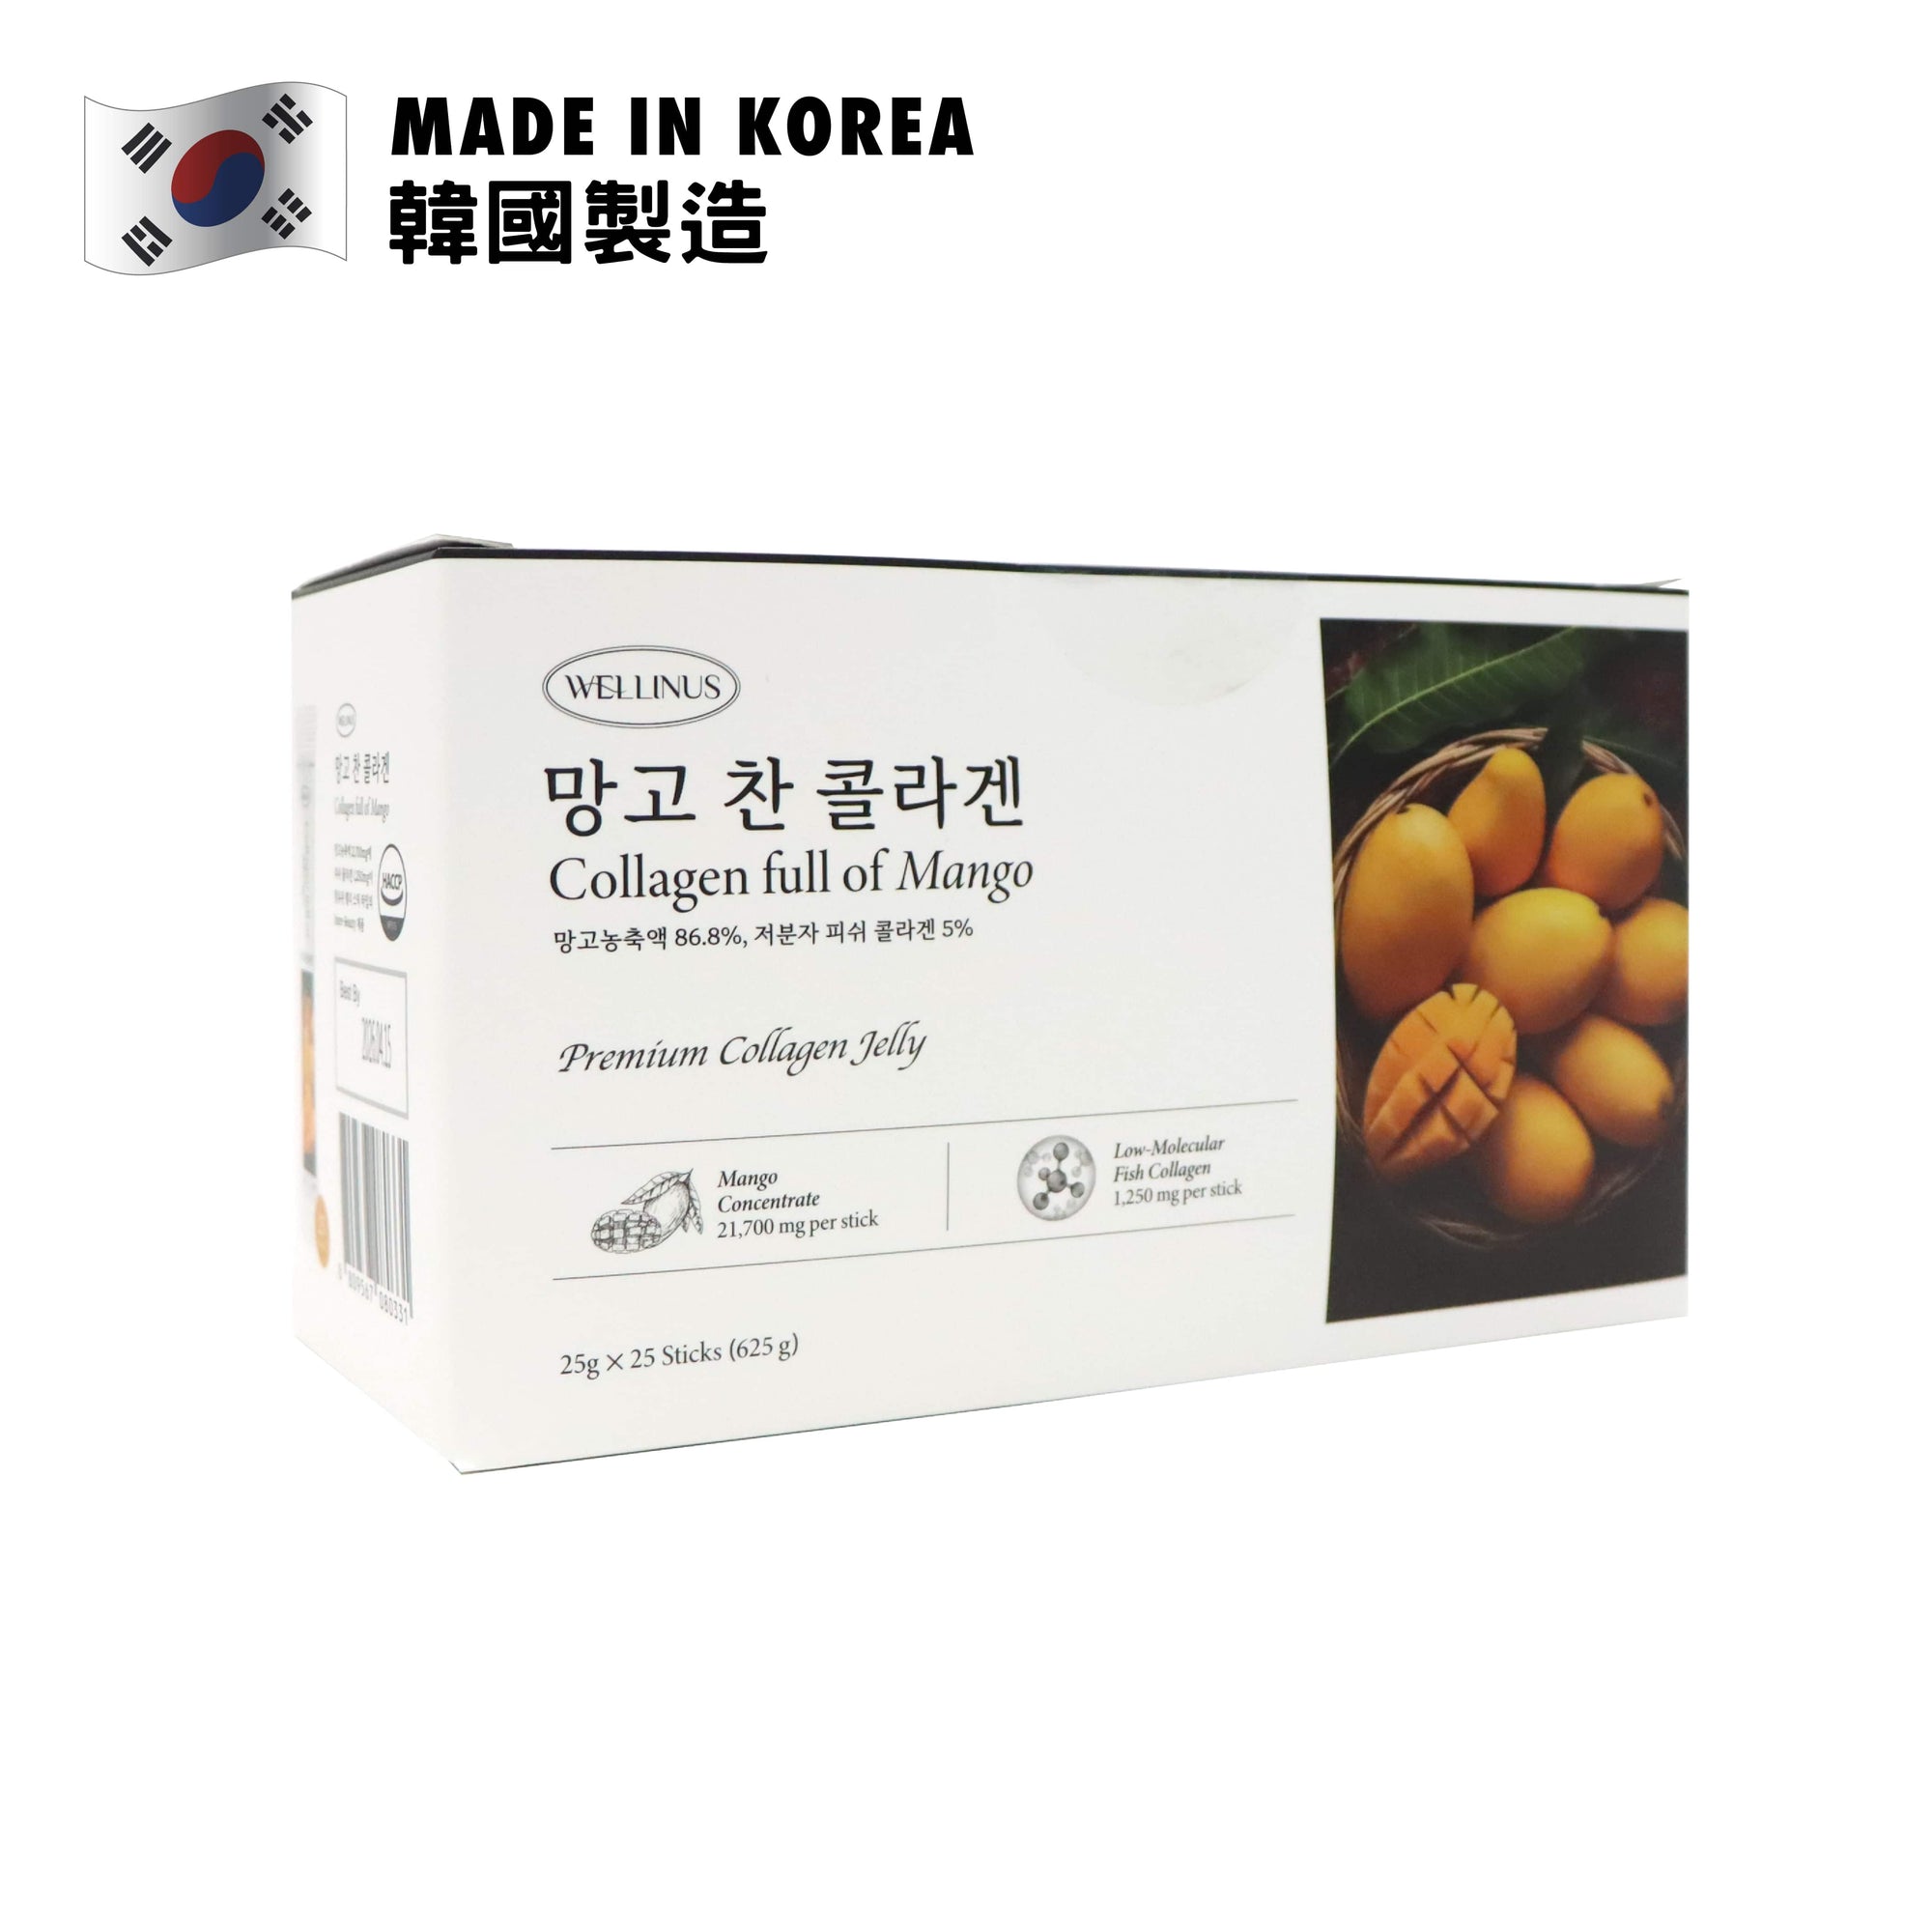 Wellinus Mango Collagen Jelly 25g x 25pcs